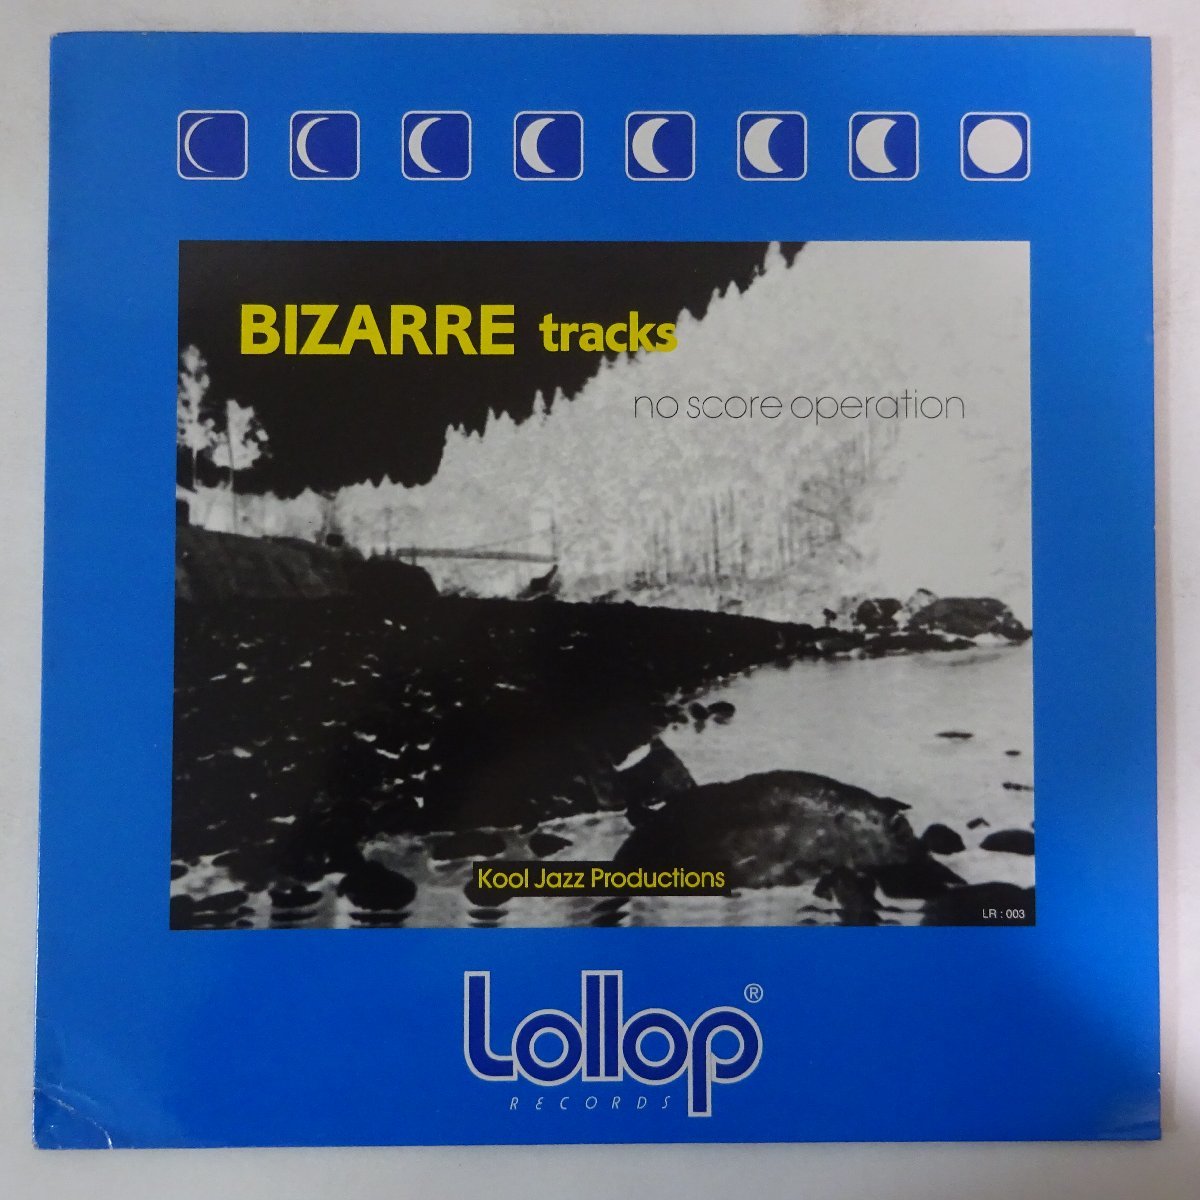 11174821;【国内盤/12inch/Acid jazz】Kool Jazz Productions / Bizarre Tracks / No Score Operation_画像1